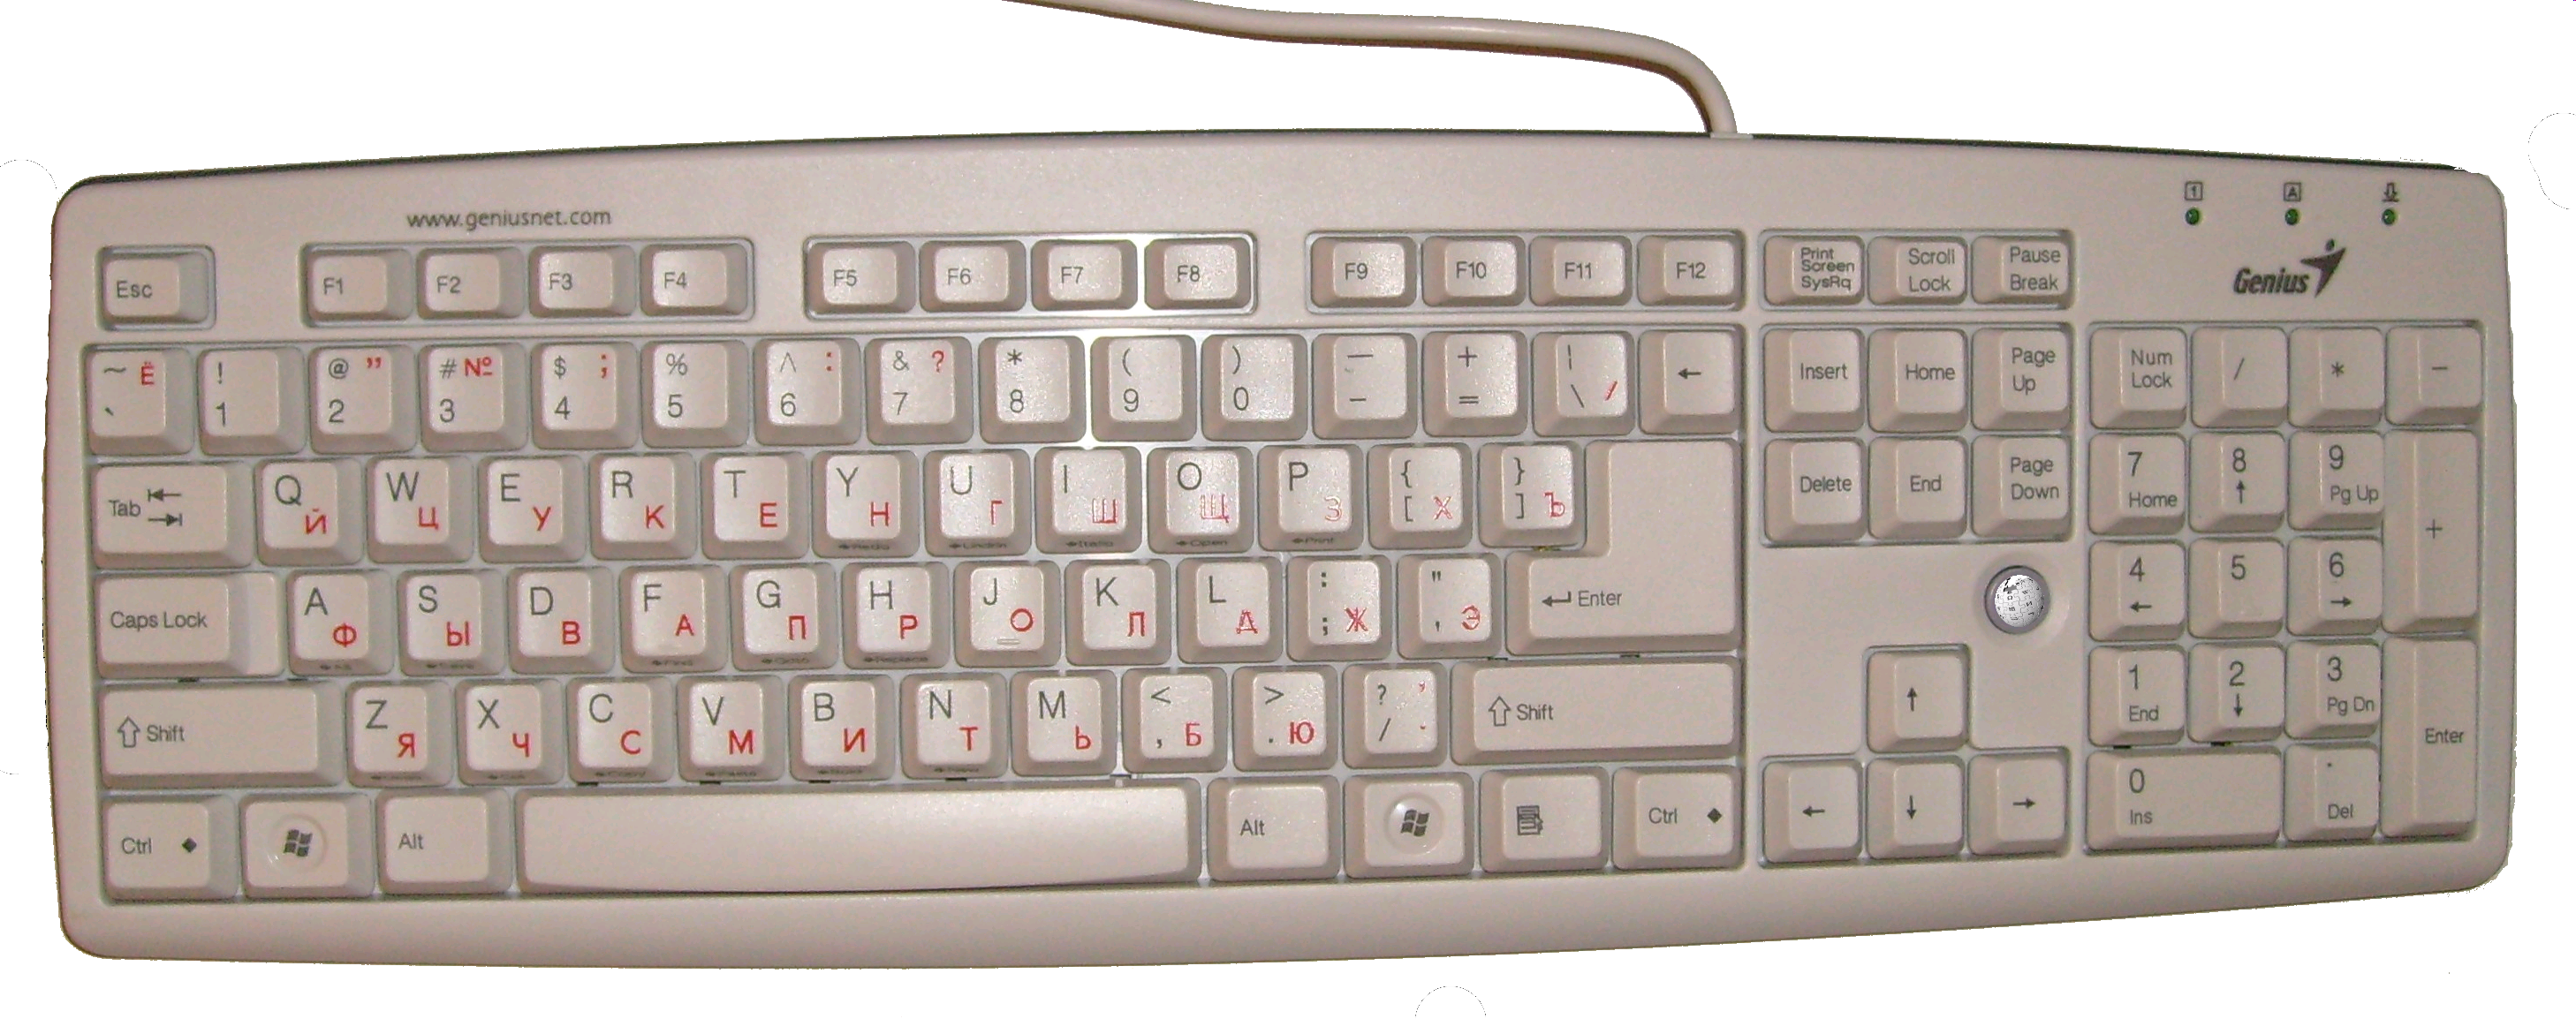 Tastiera del computer